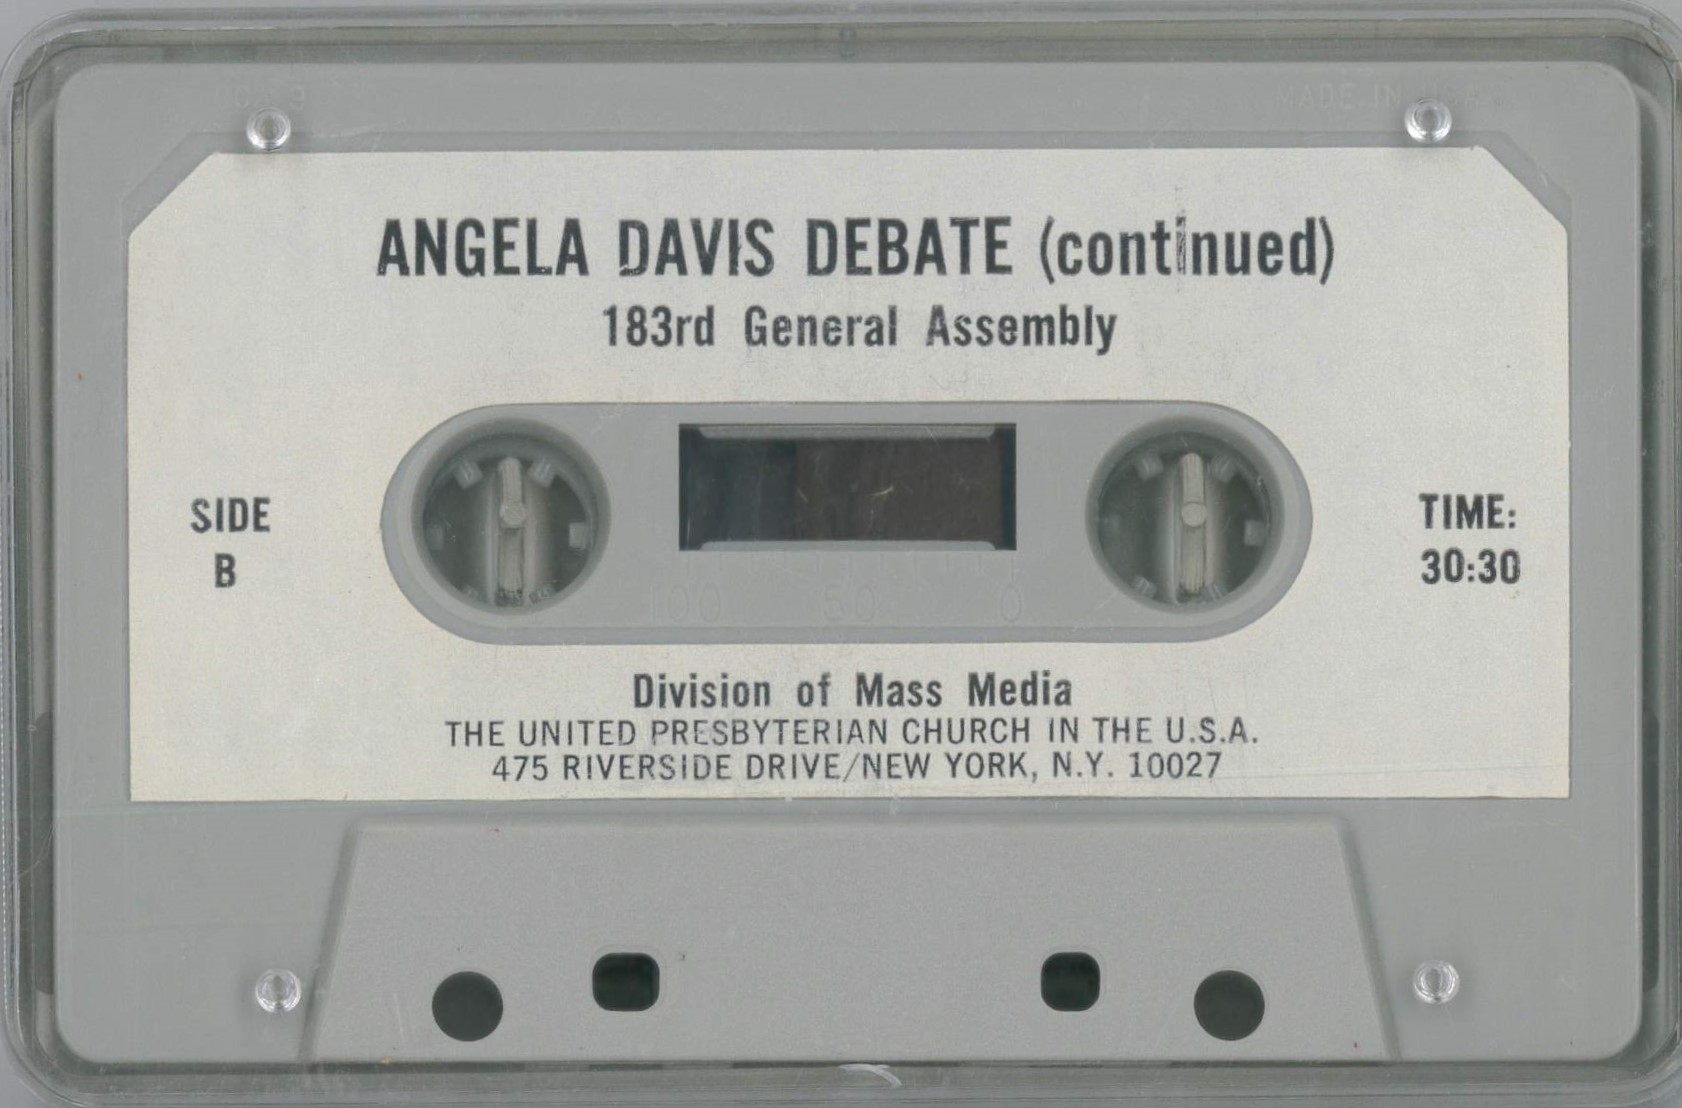 Angela Davis debate, 183rd General Assembly, 1971, side B.